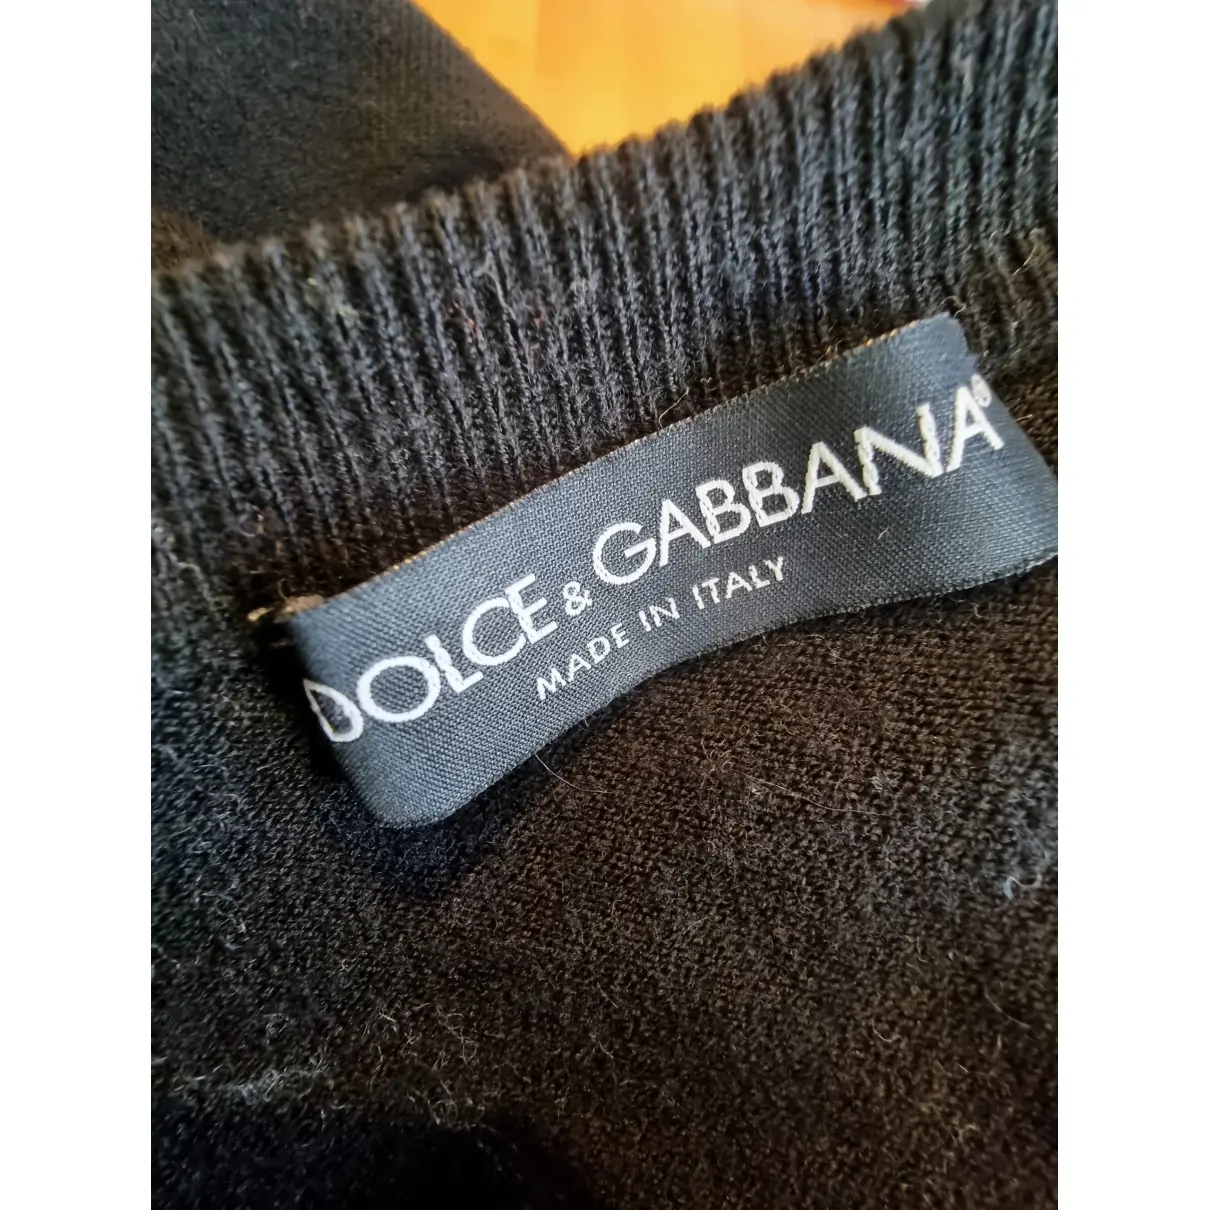 Buy Dolce & Gabbana Cashmere jumper online